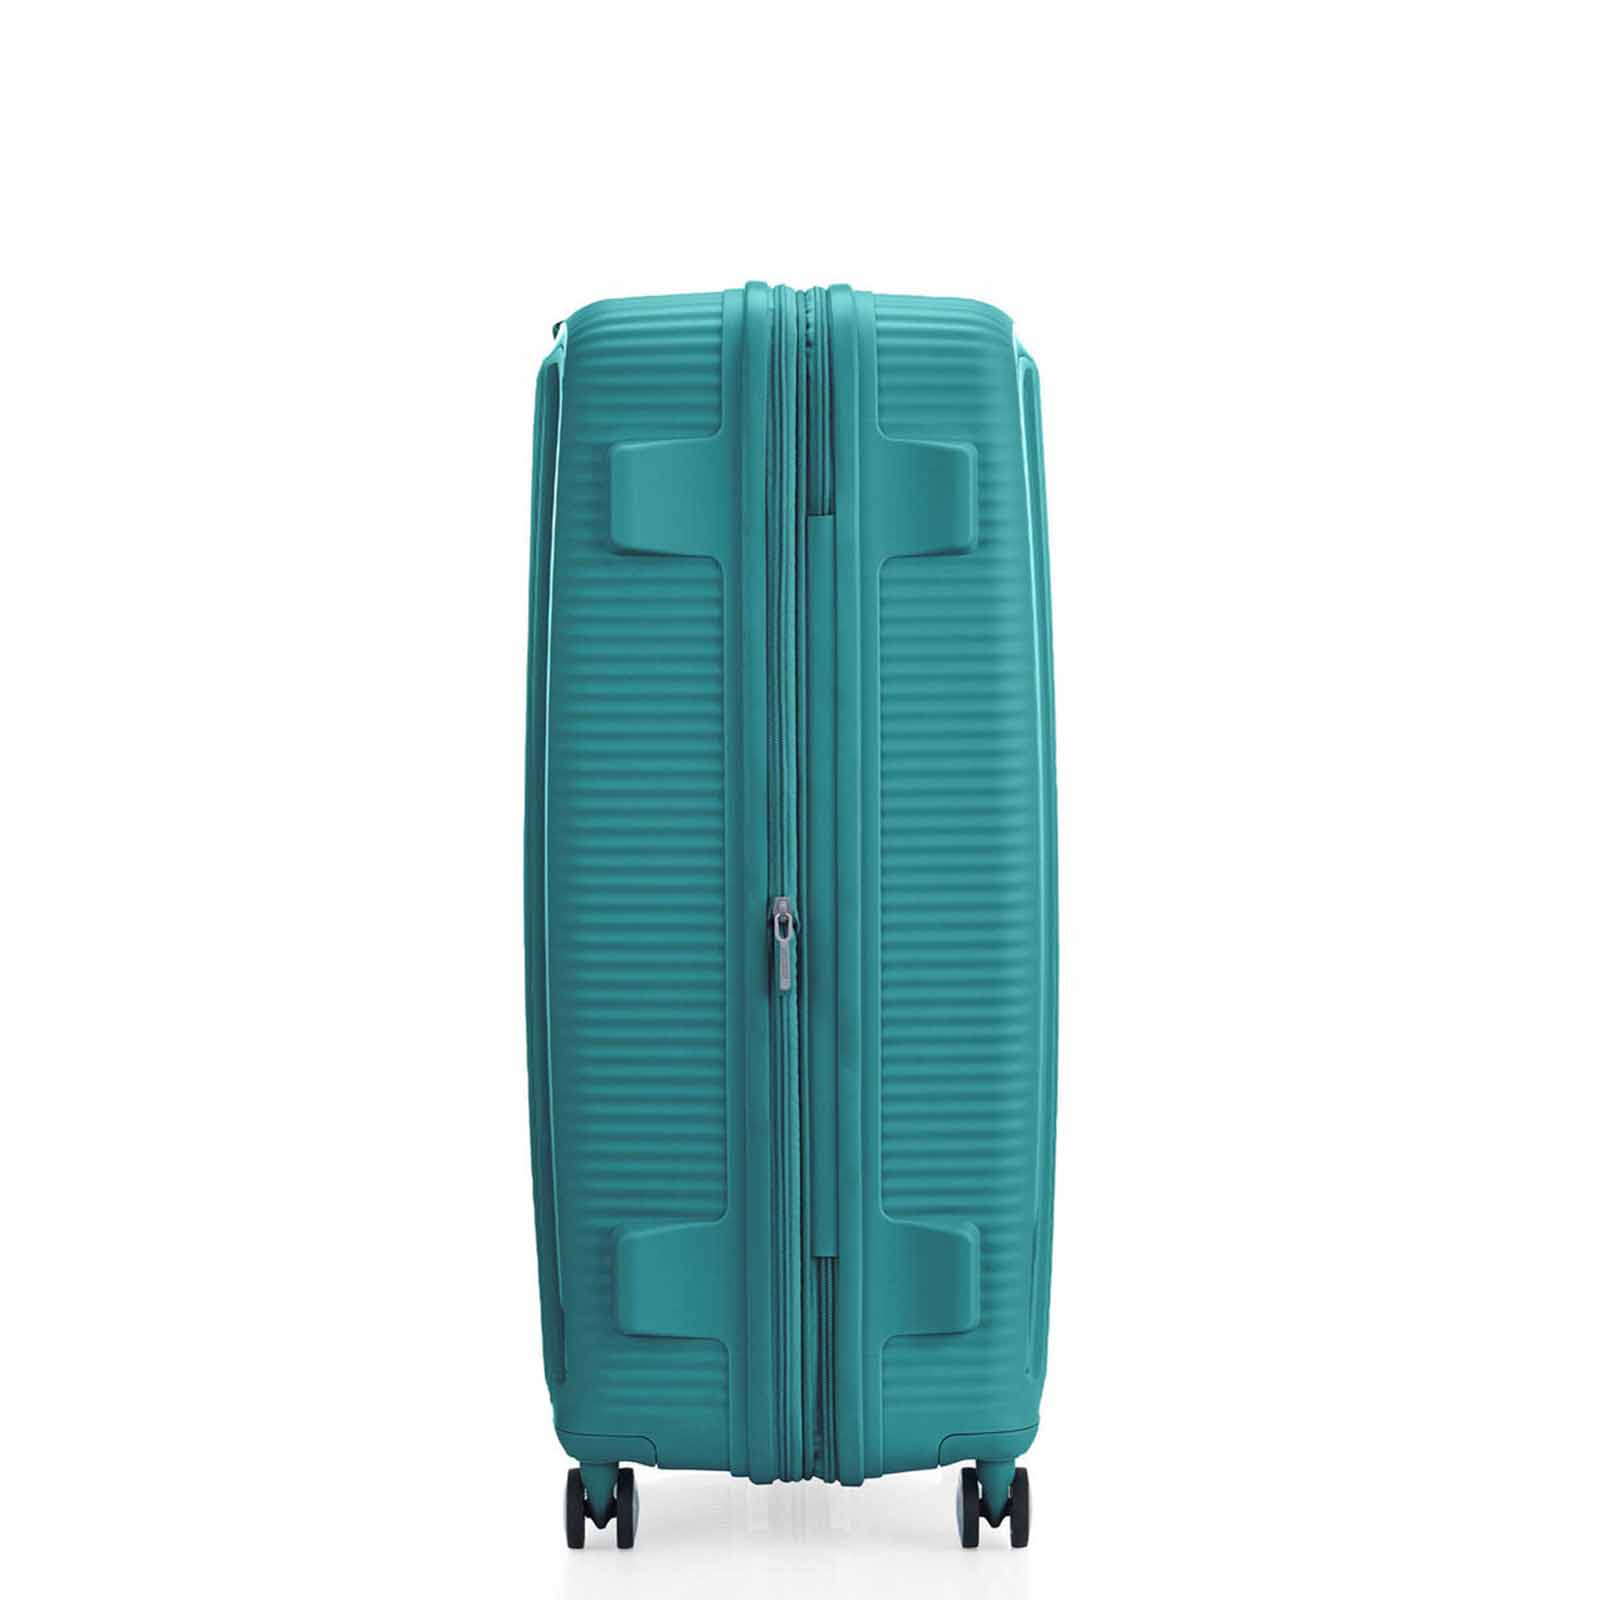 American-Tourister-Curio-2-80cm-Suitcase-Jade-Green-End